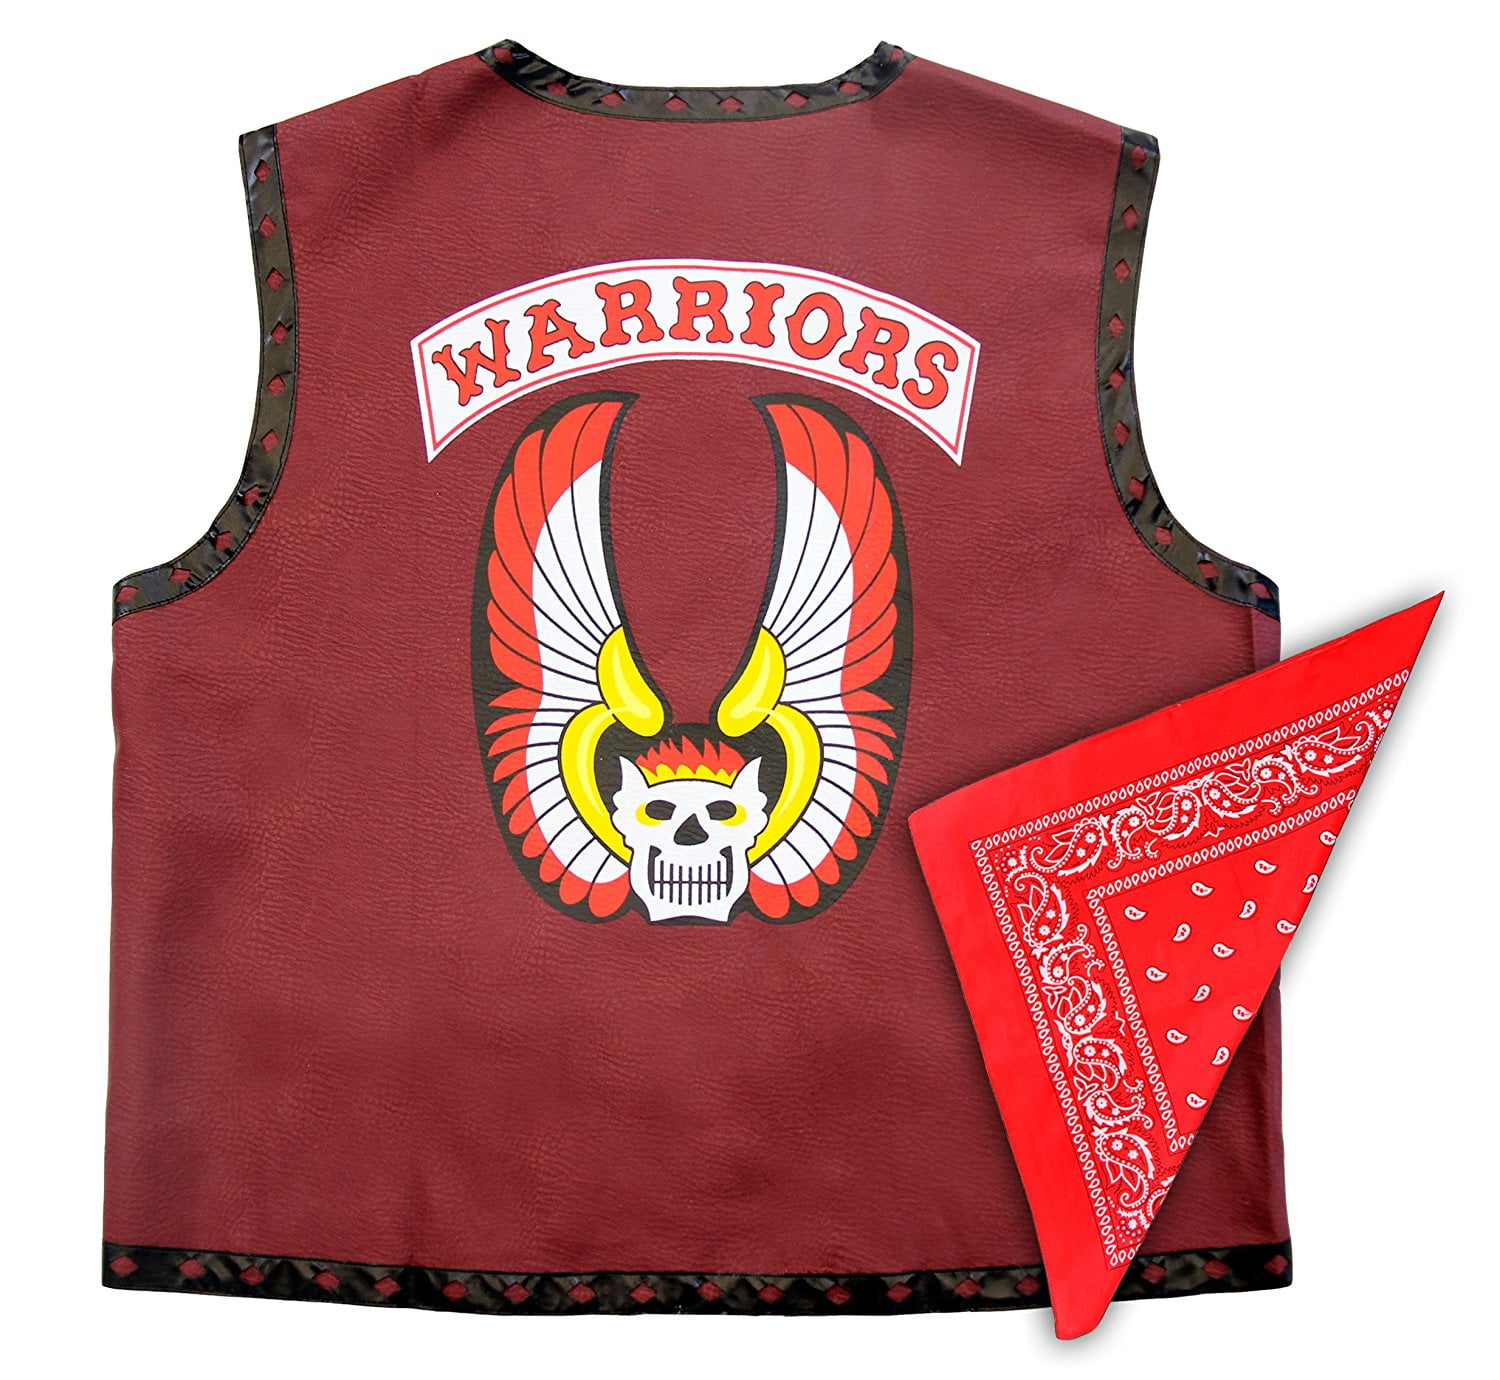 The Warriors Movie Jacket